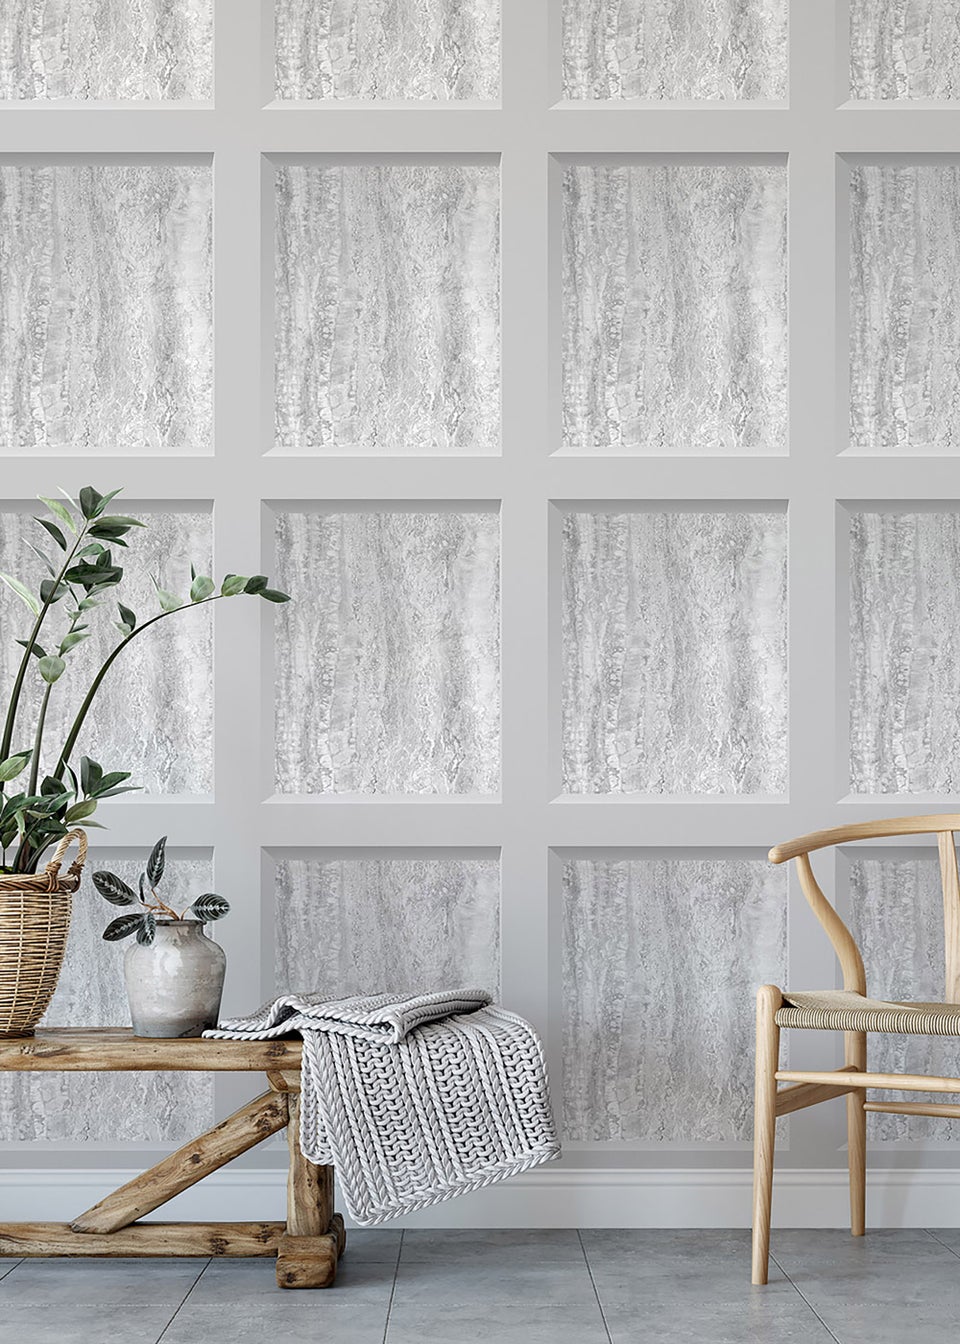 How to do wallpaper panels - Herts Decorators